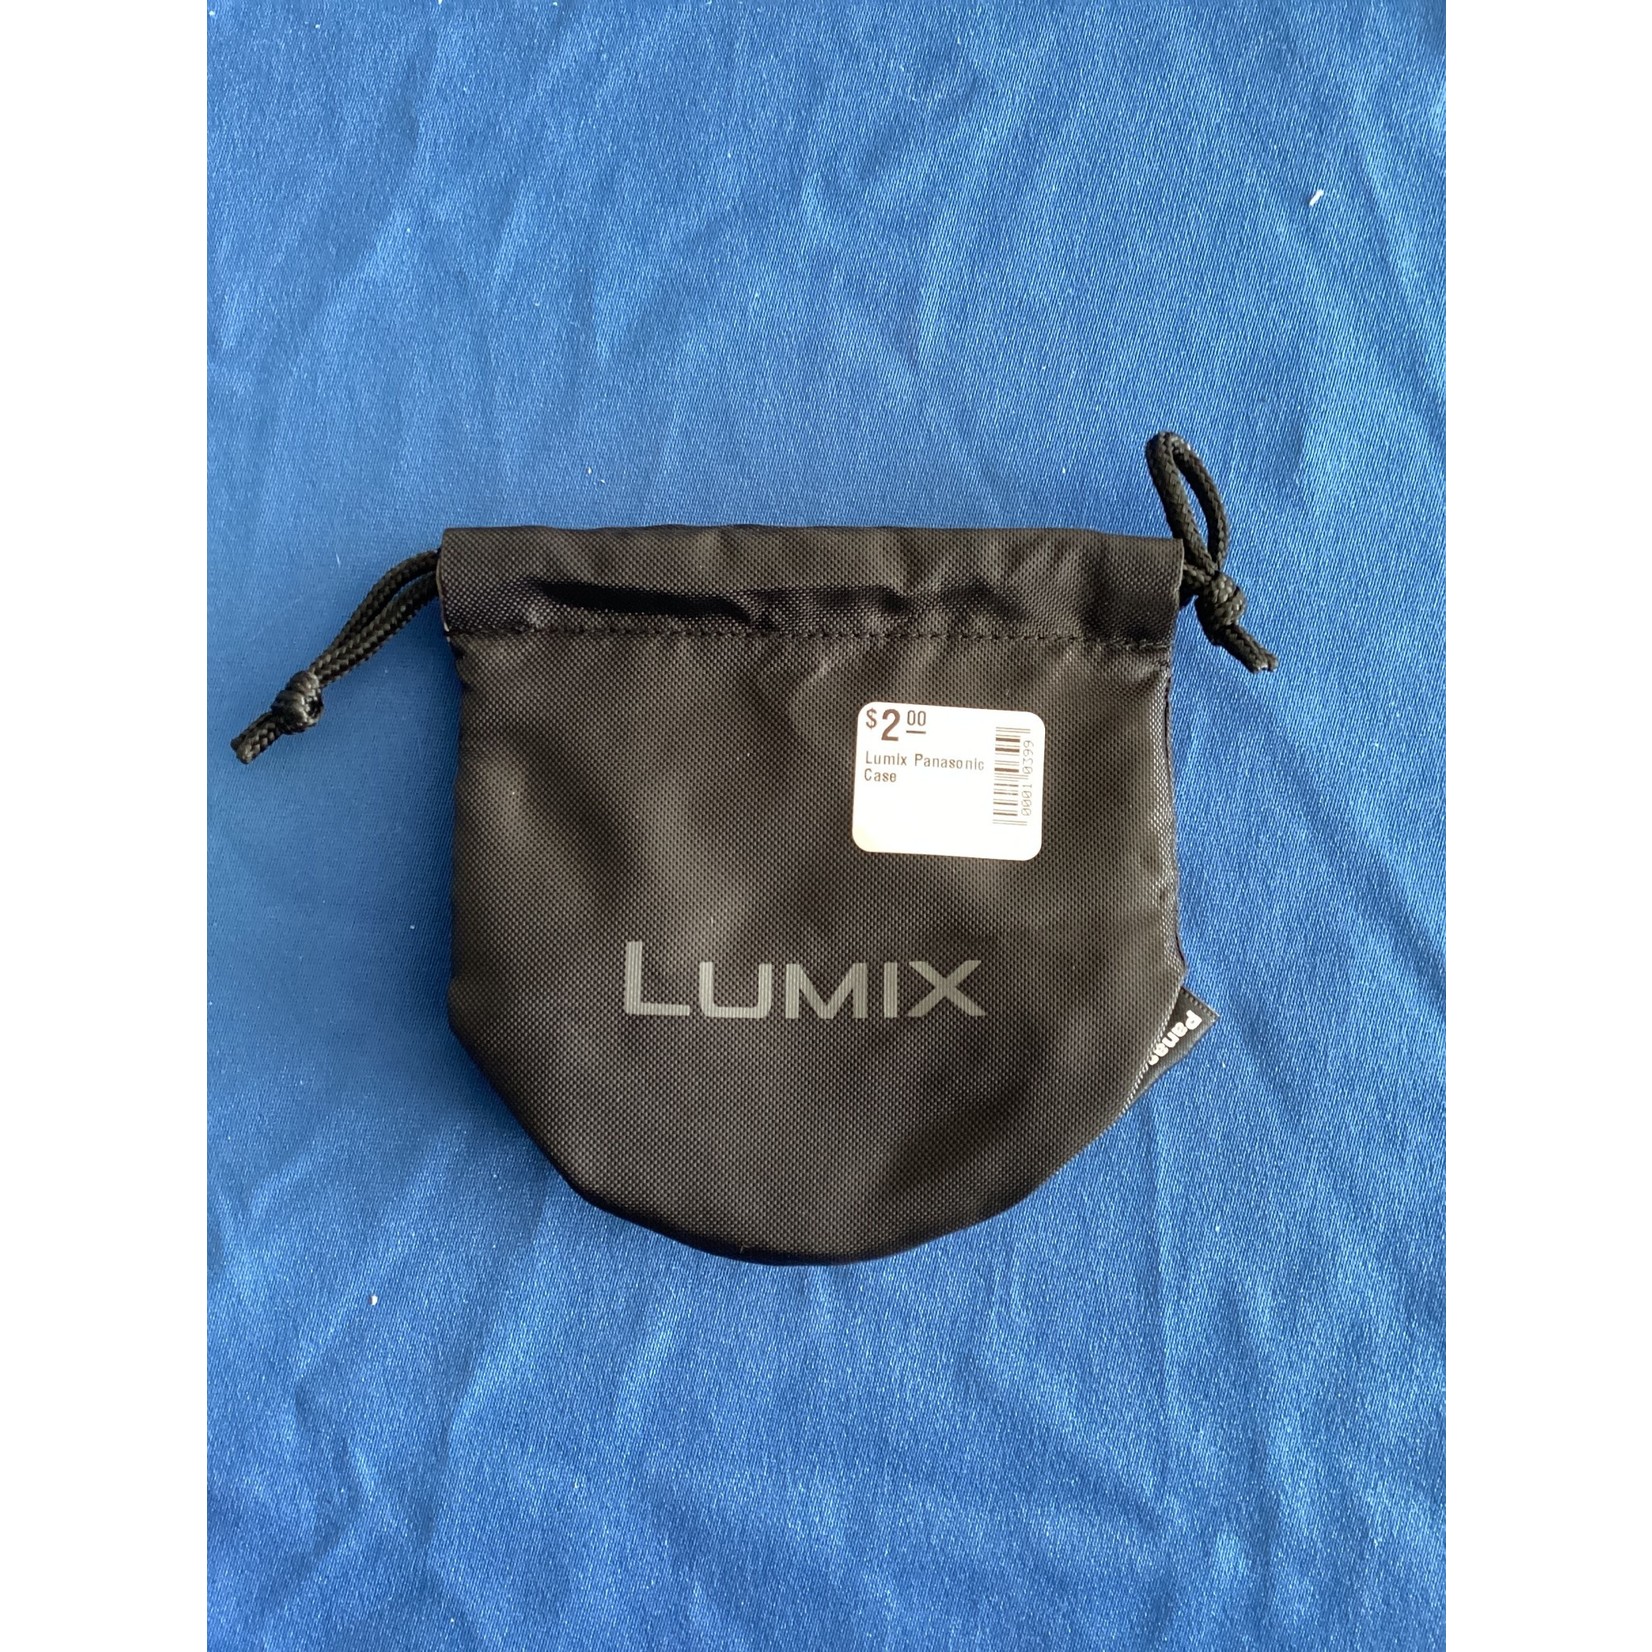 Lumix Panasonic Case